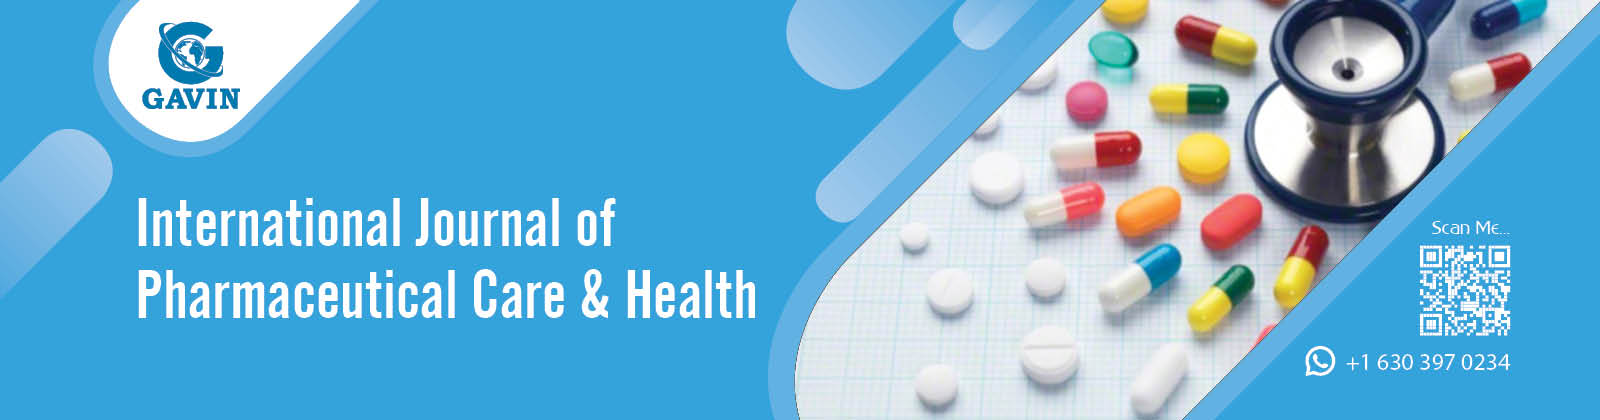 International Journal of Pharmaceutical Care & Health